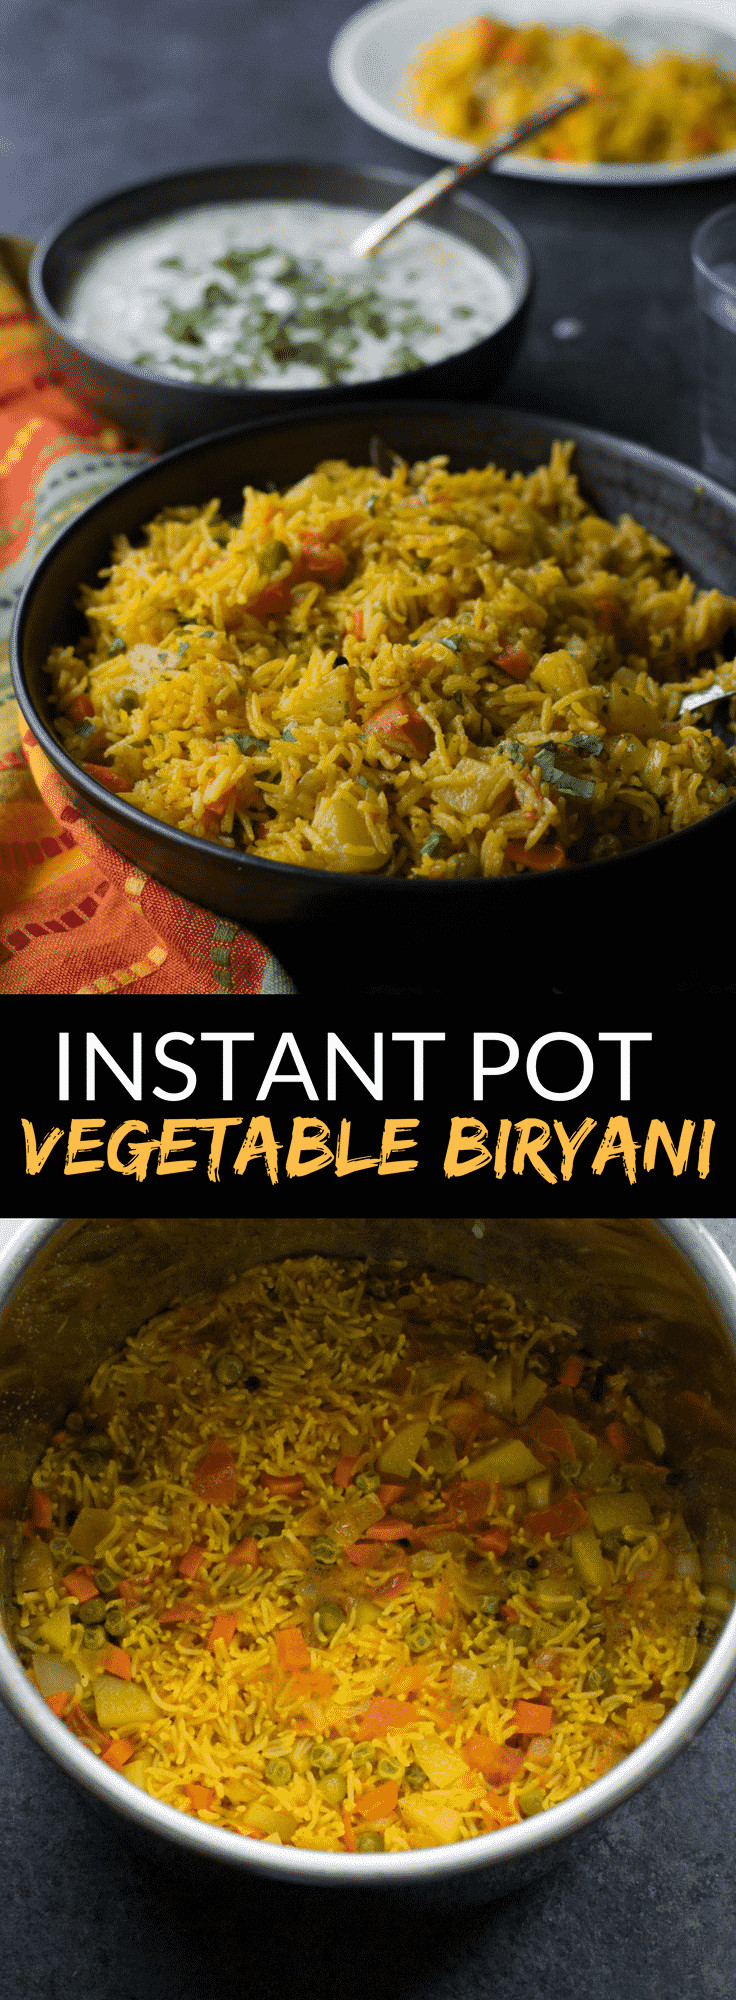 Instapot Recipes Vegetarian
 Instant Pot Ve able biryani recipe How to make veg